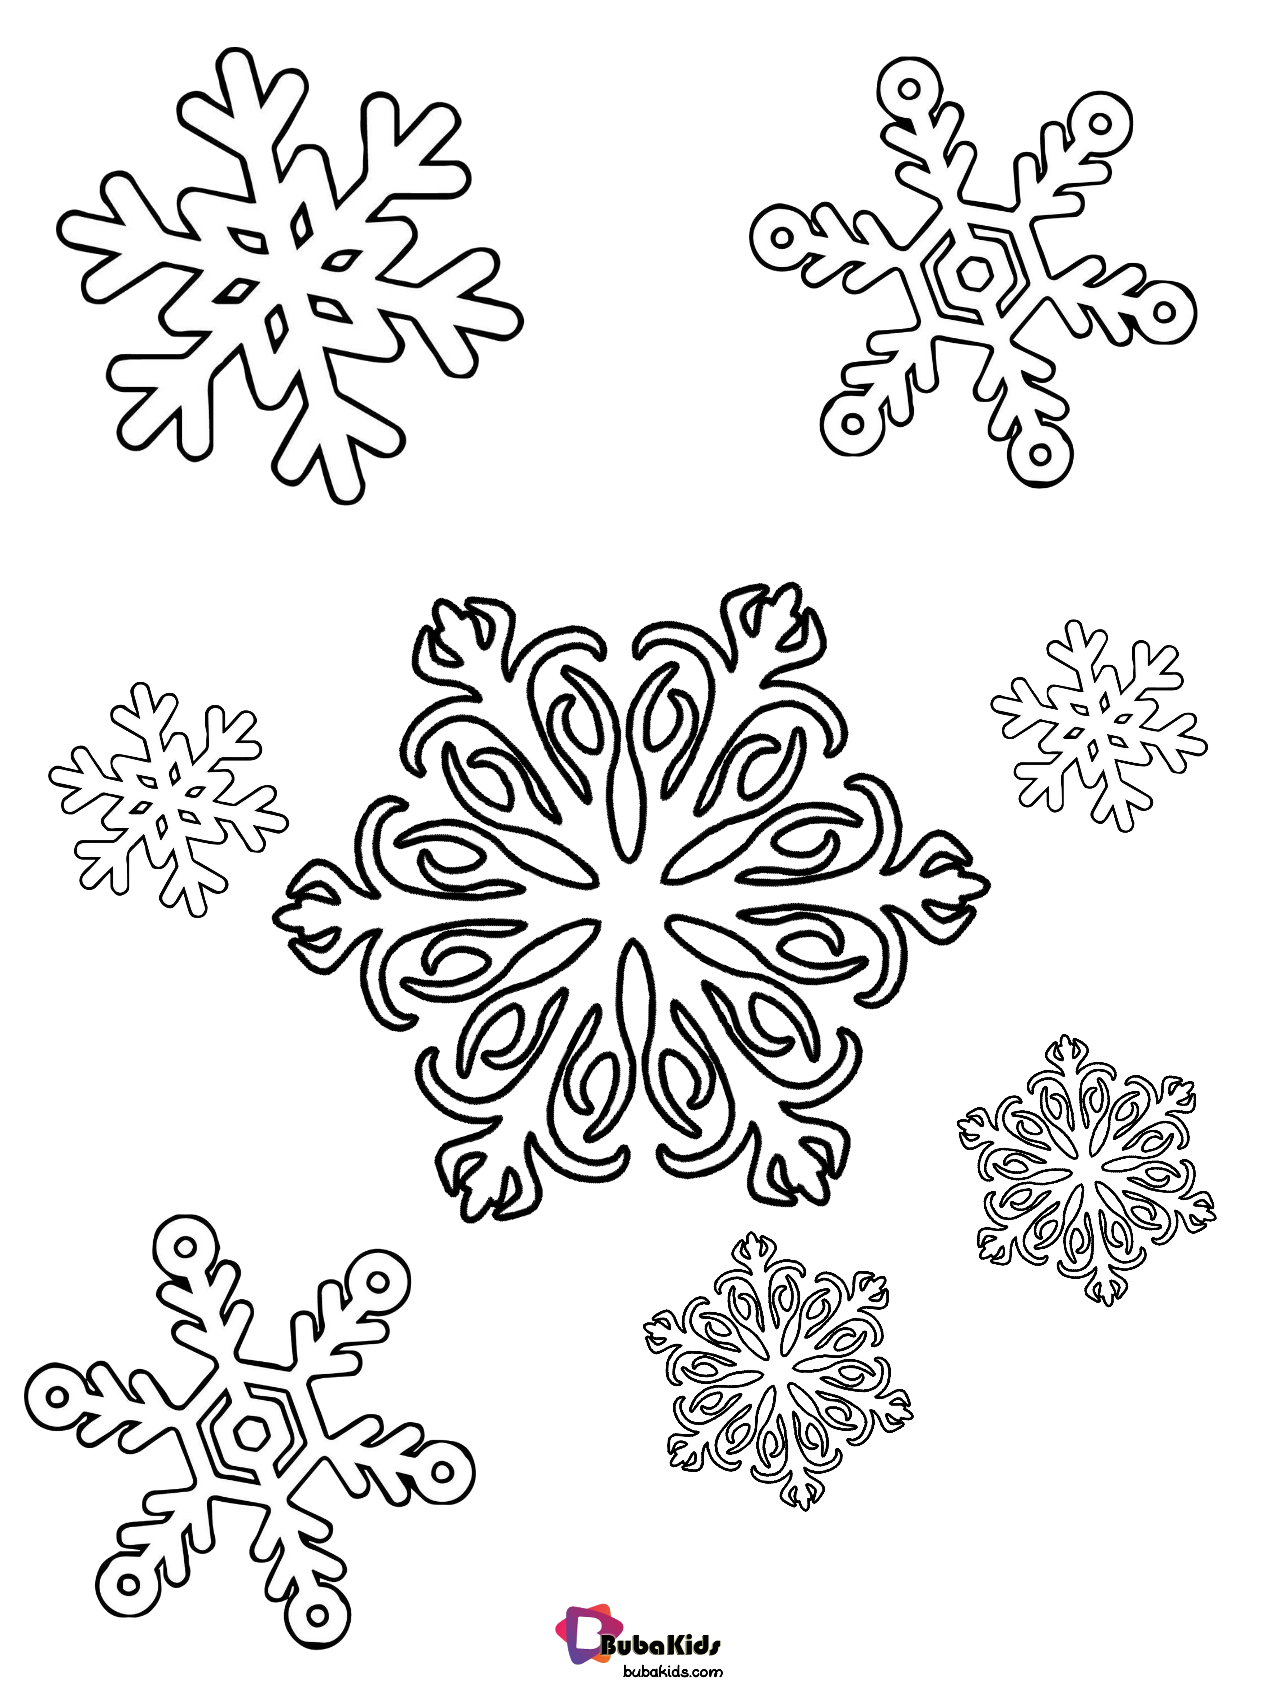 Free download winter snowflake printable coloring page. Wallpaper